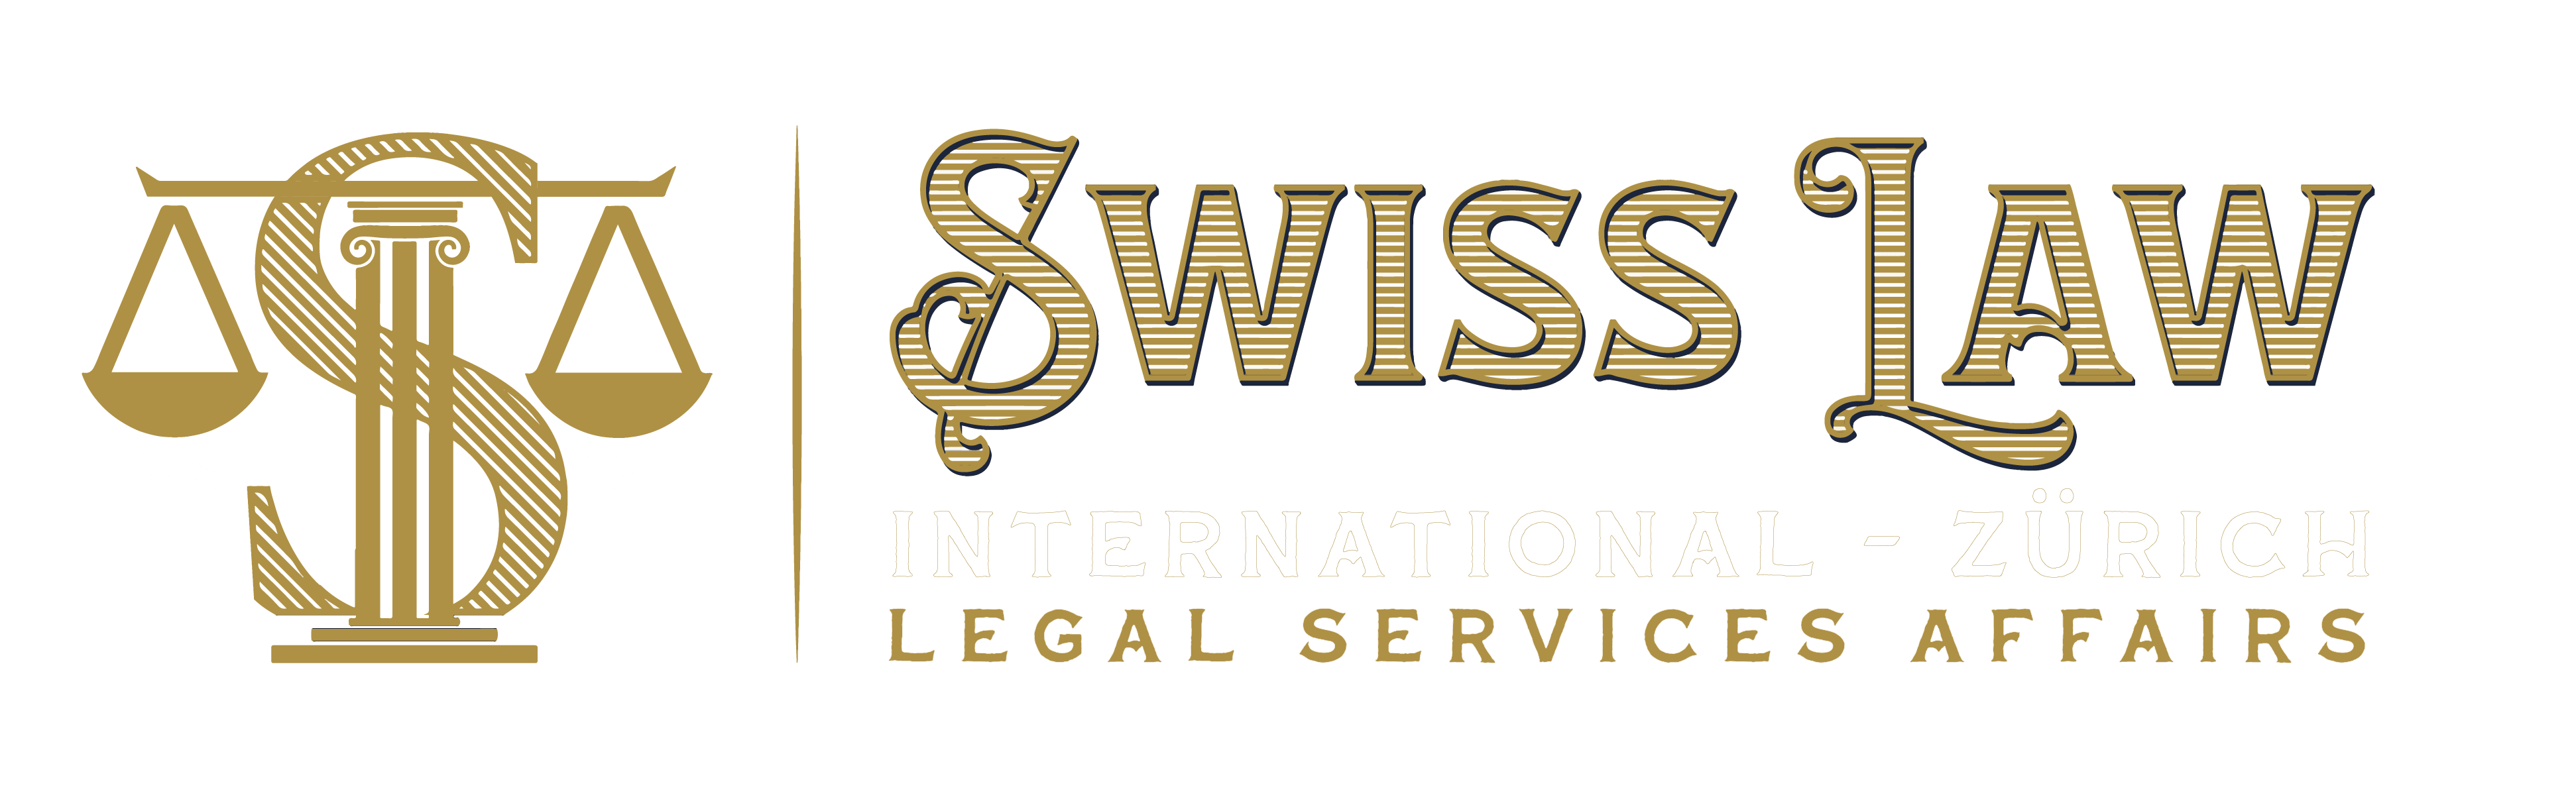 new formats logo swiss law-09